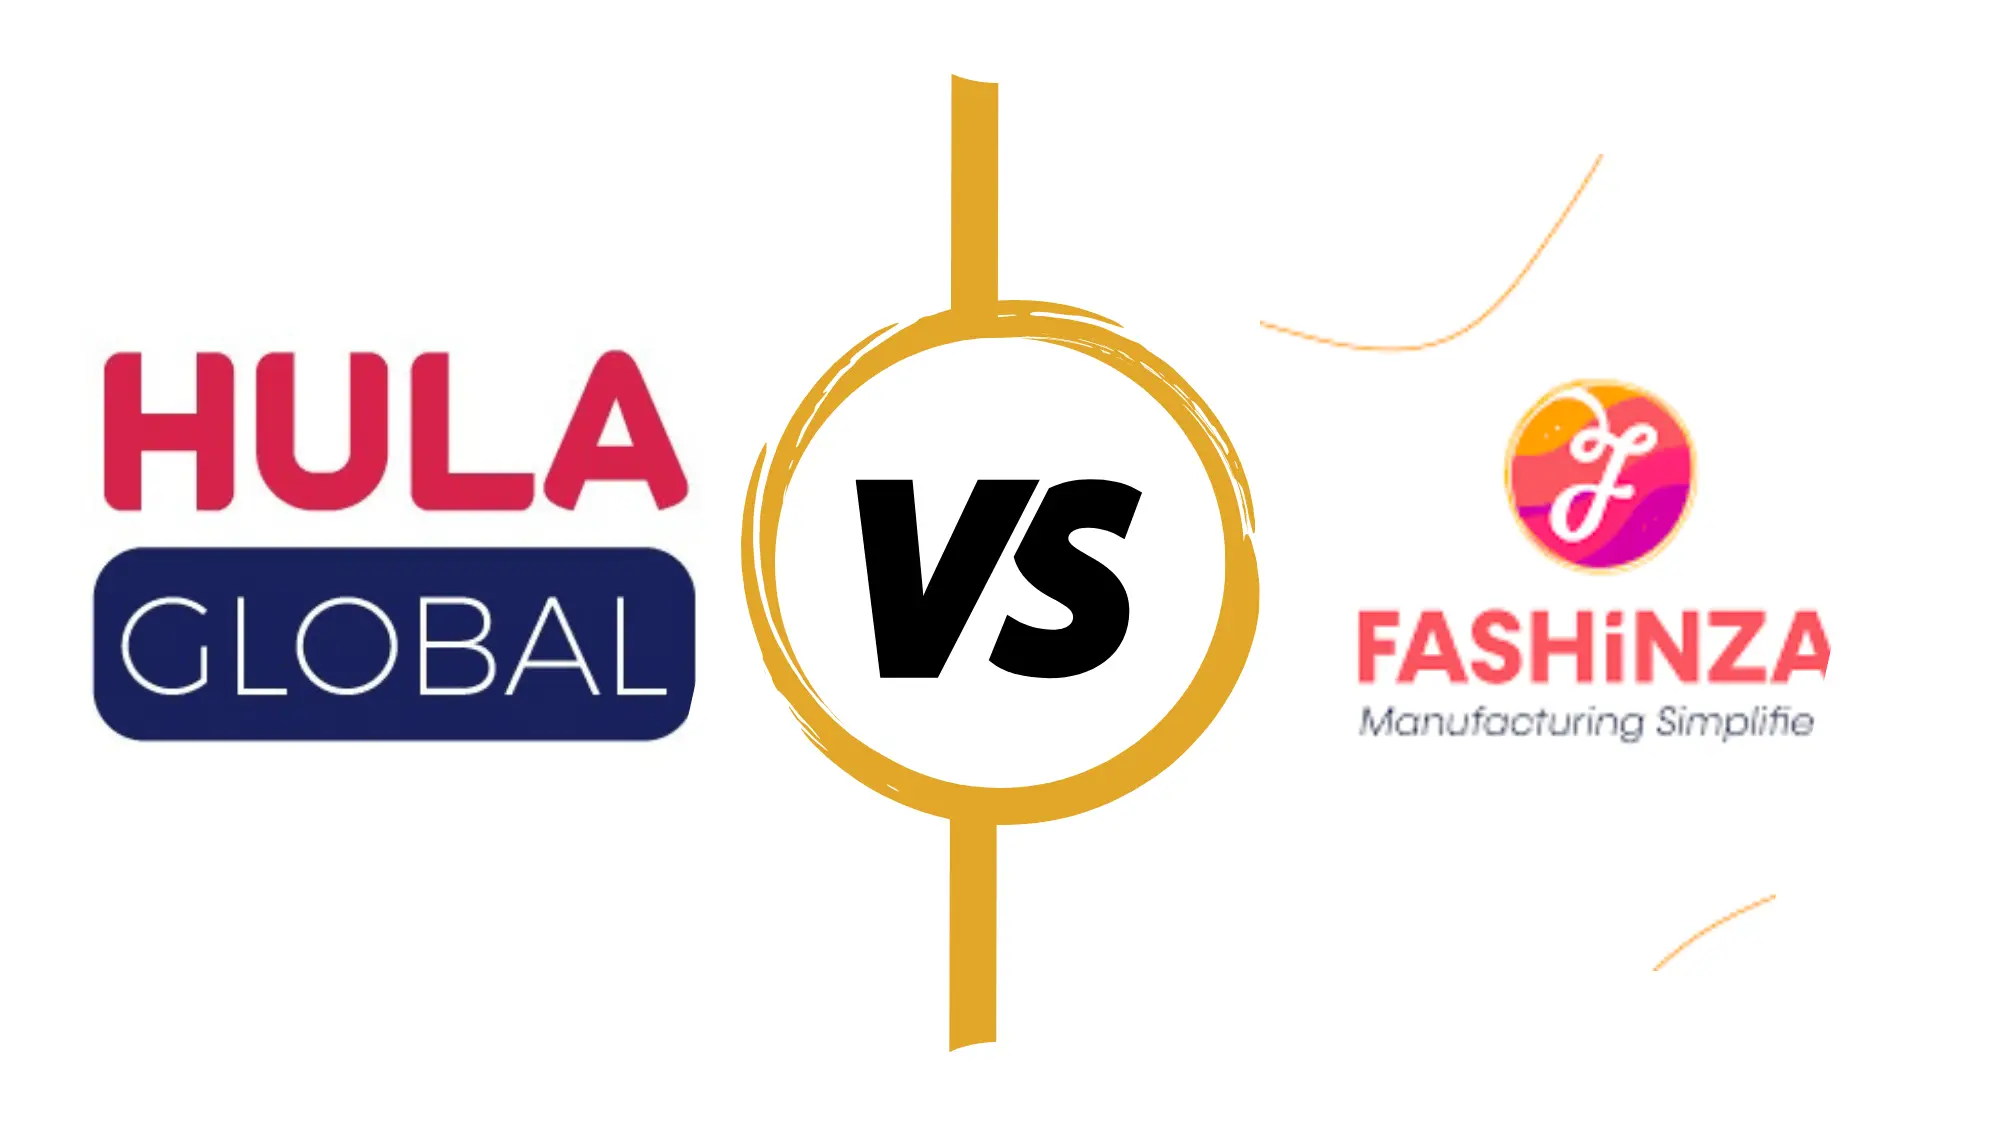 Hula Global vs. Fashinza